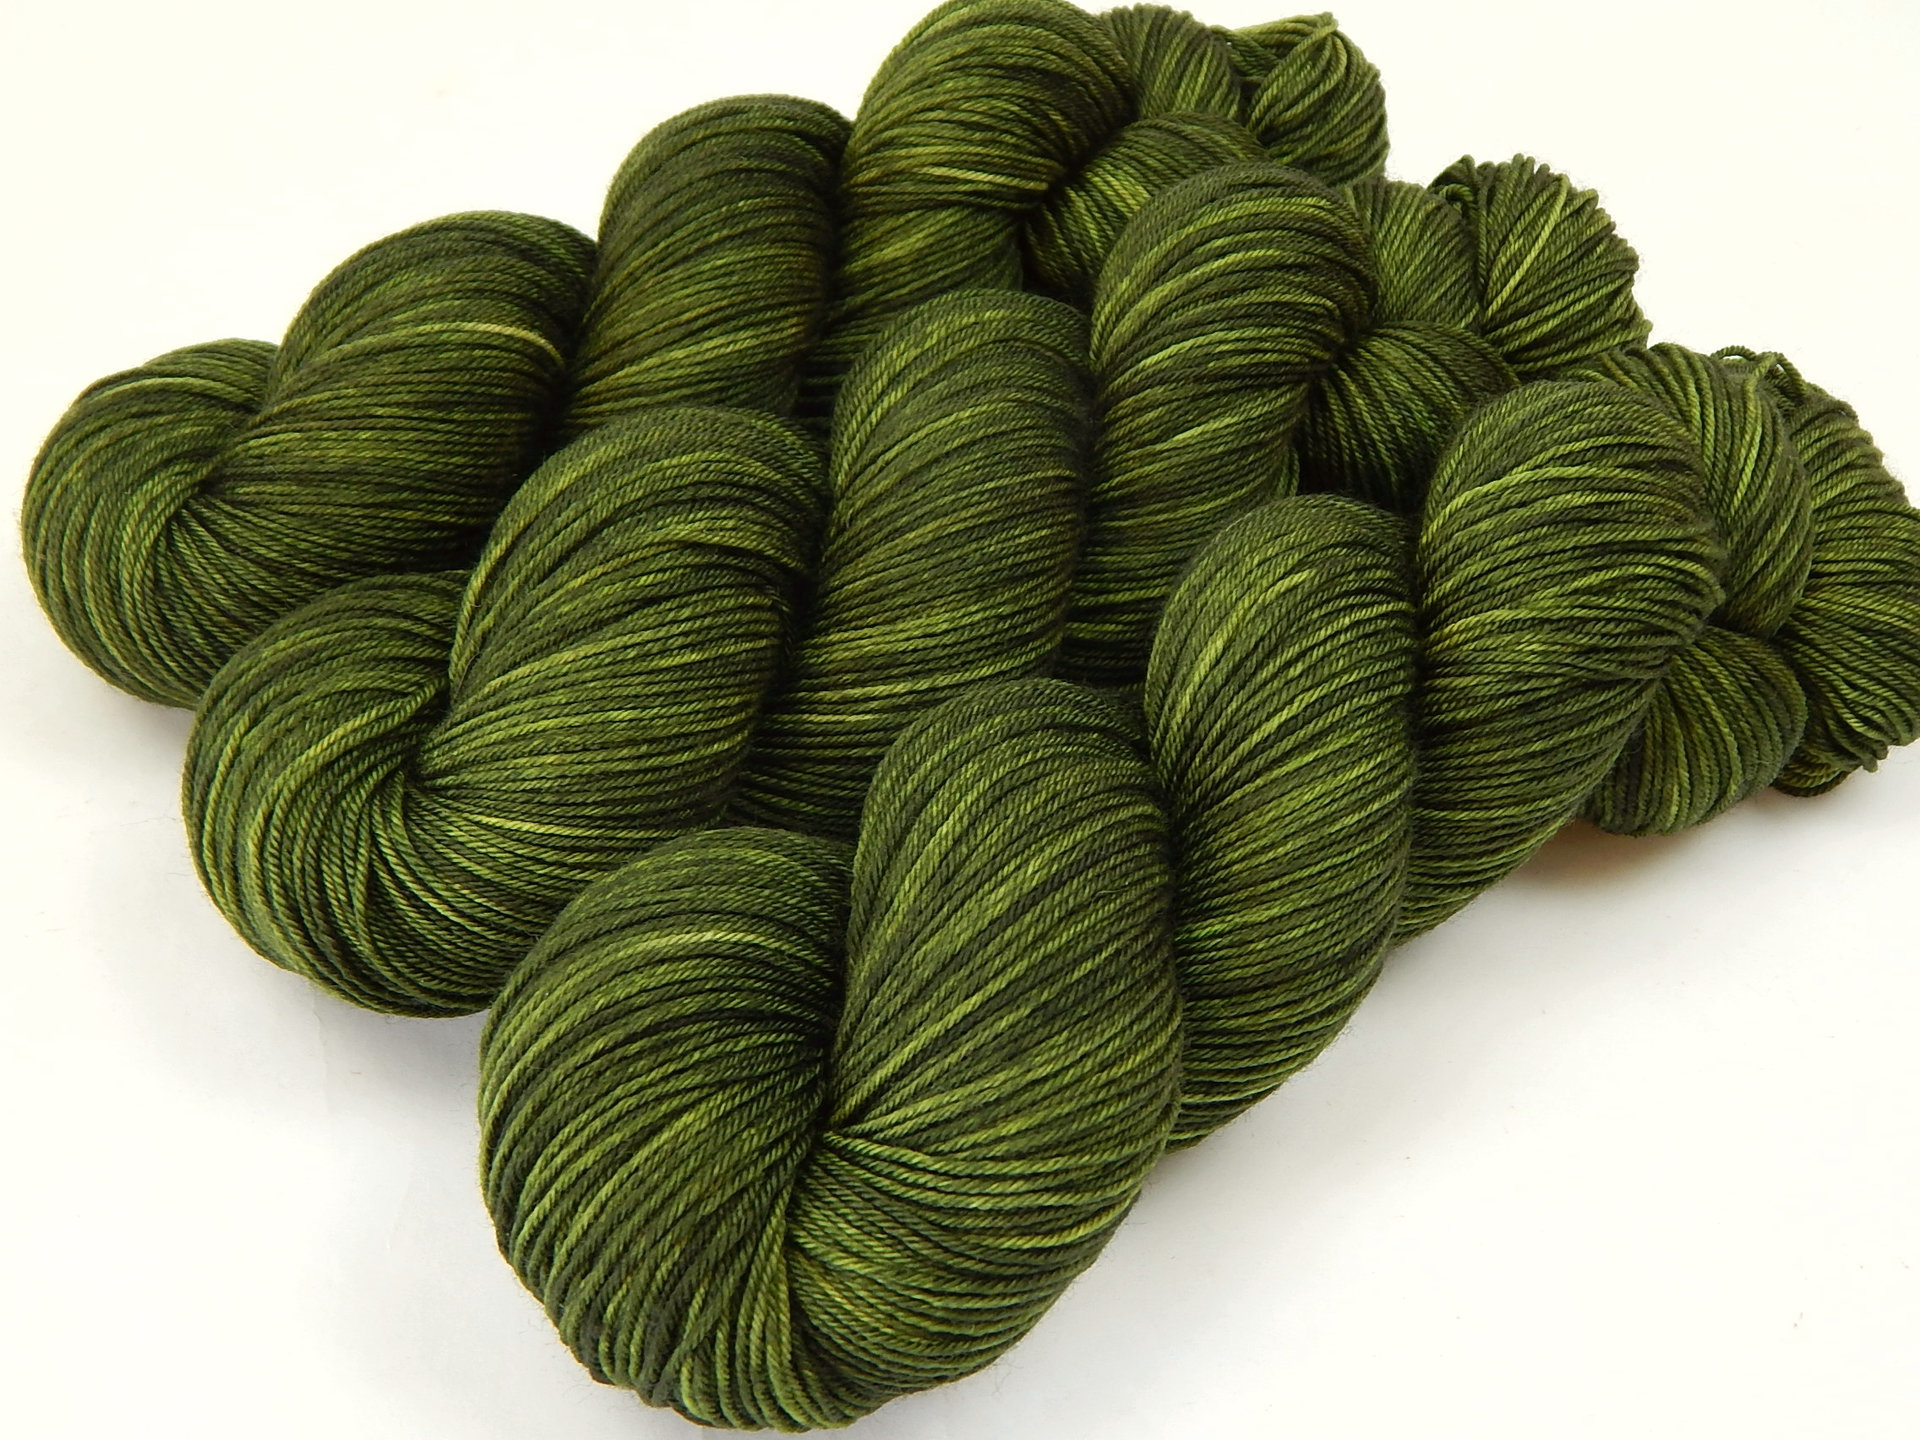 Hand Dyed Sock Yarn, Fingering Weight 4 Ply 100% Superwash Merino Wool - Moss Tonal - Indie Dyer Olive Green Knitting Yarn, Hand Dyed Yarn